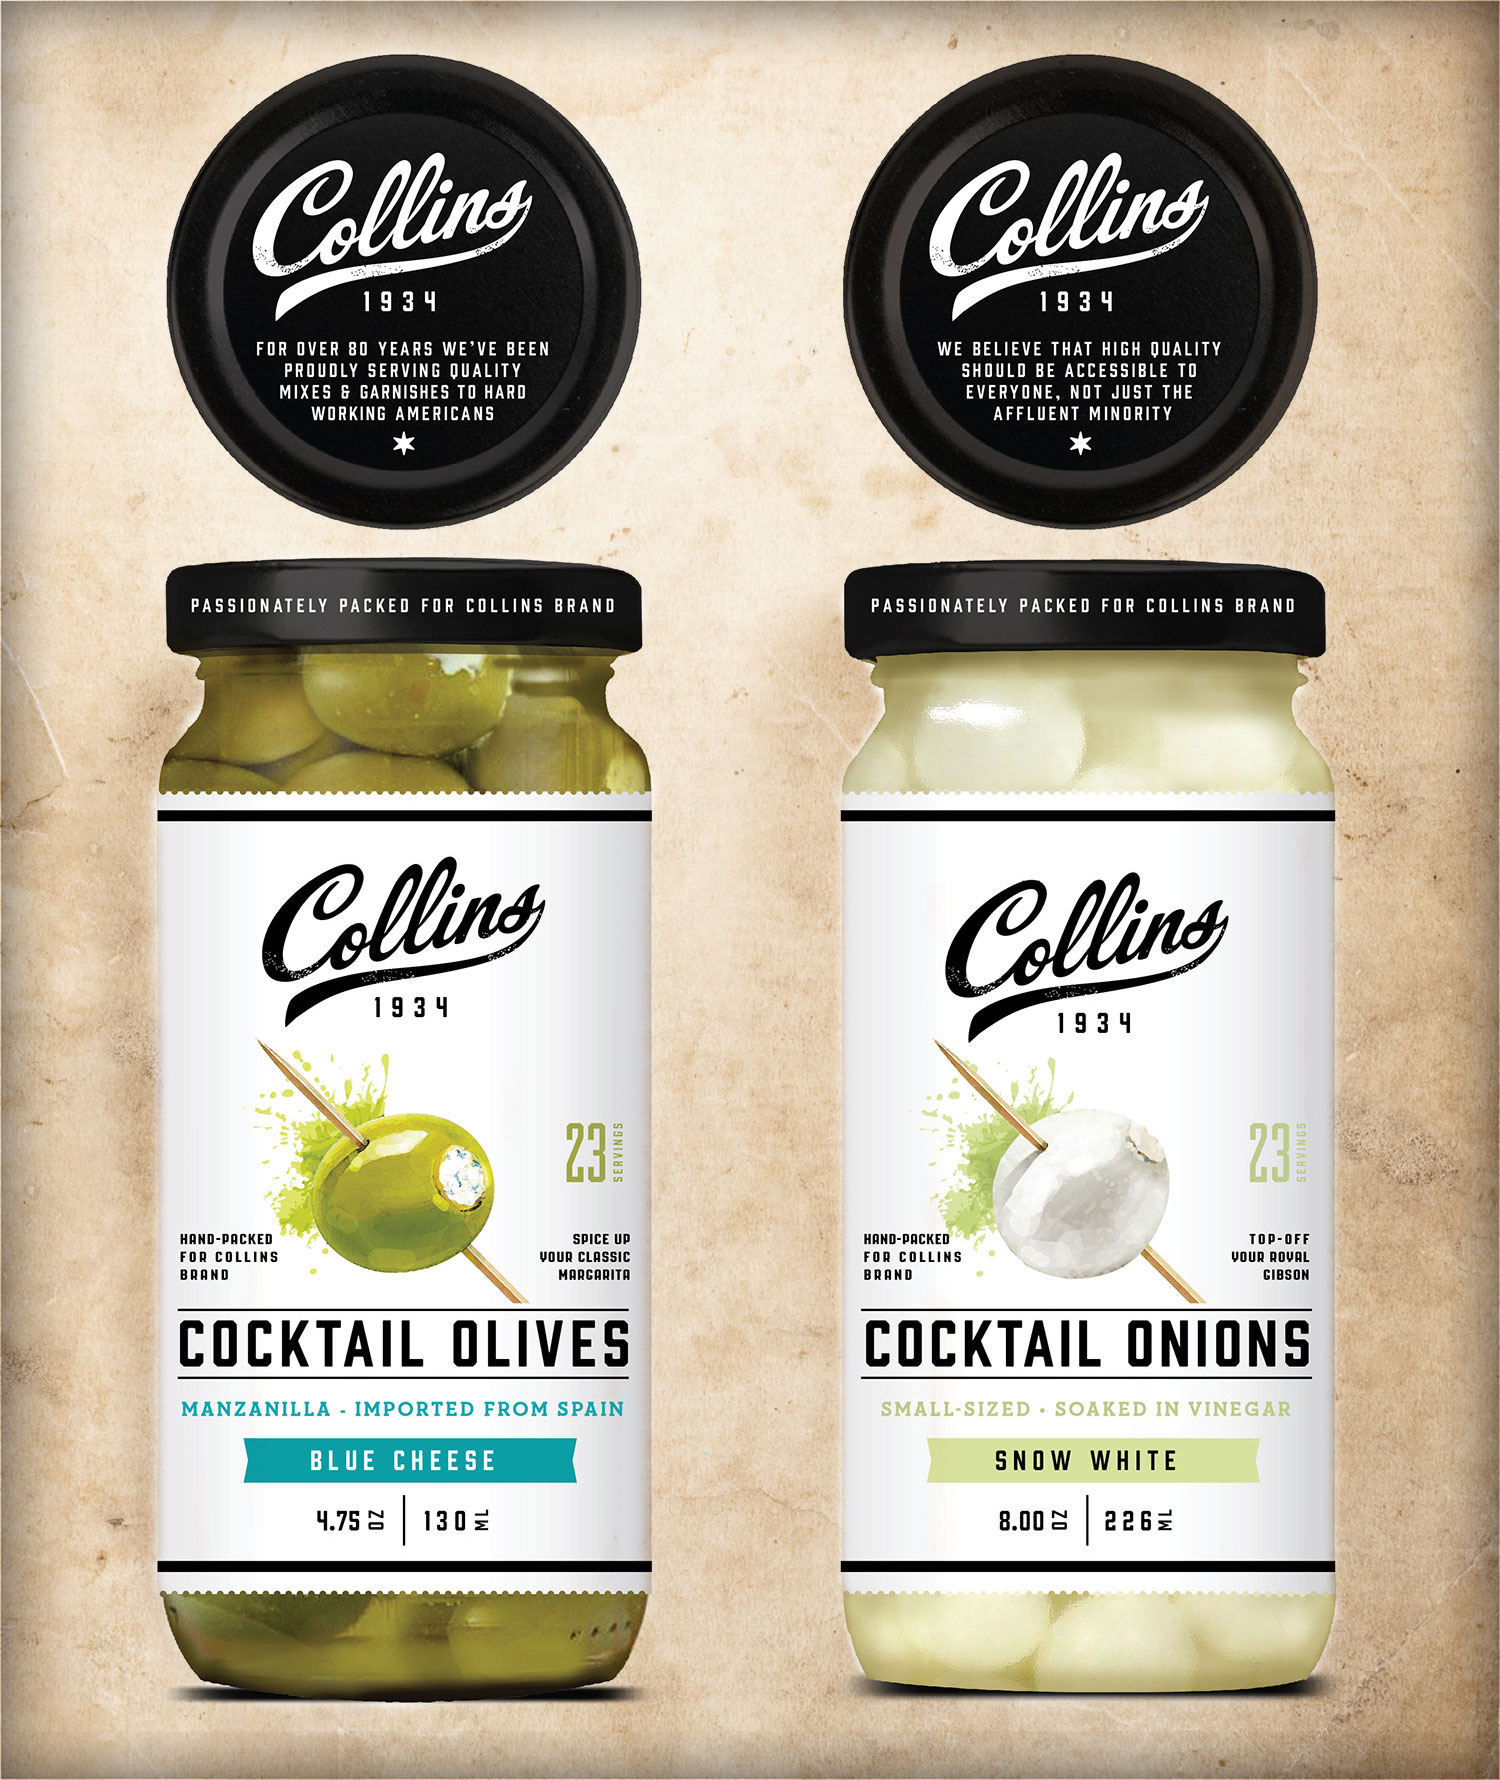 Collins-Rebrand-Packaging-Garnishes-Yuri-Shvets-31.jpg